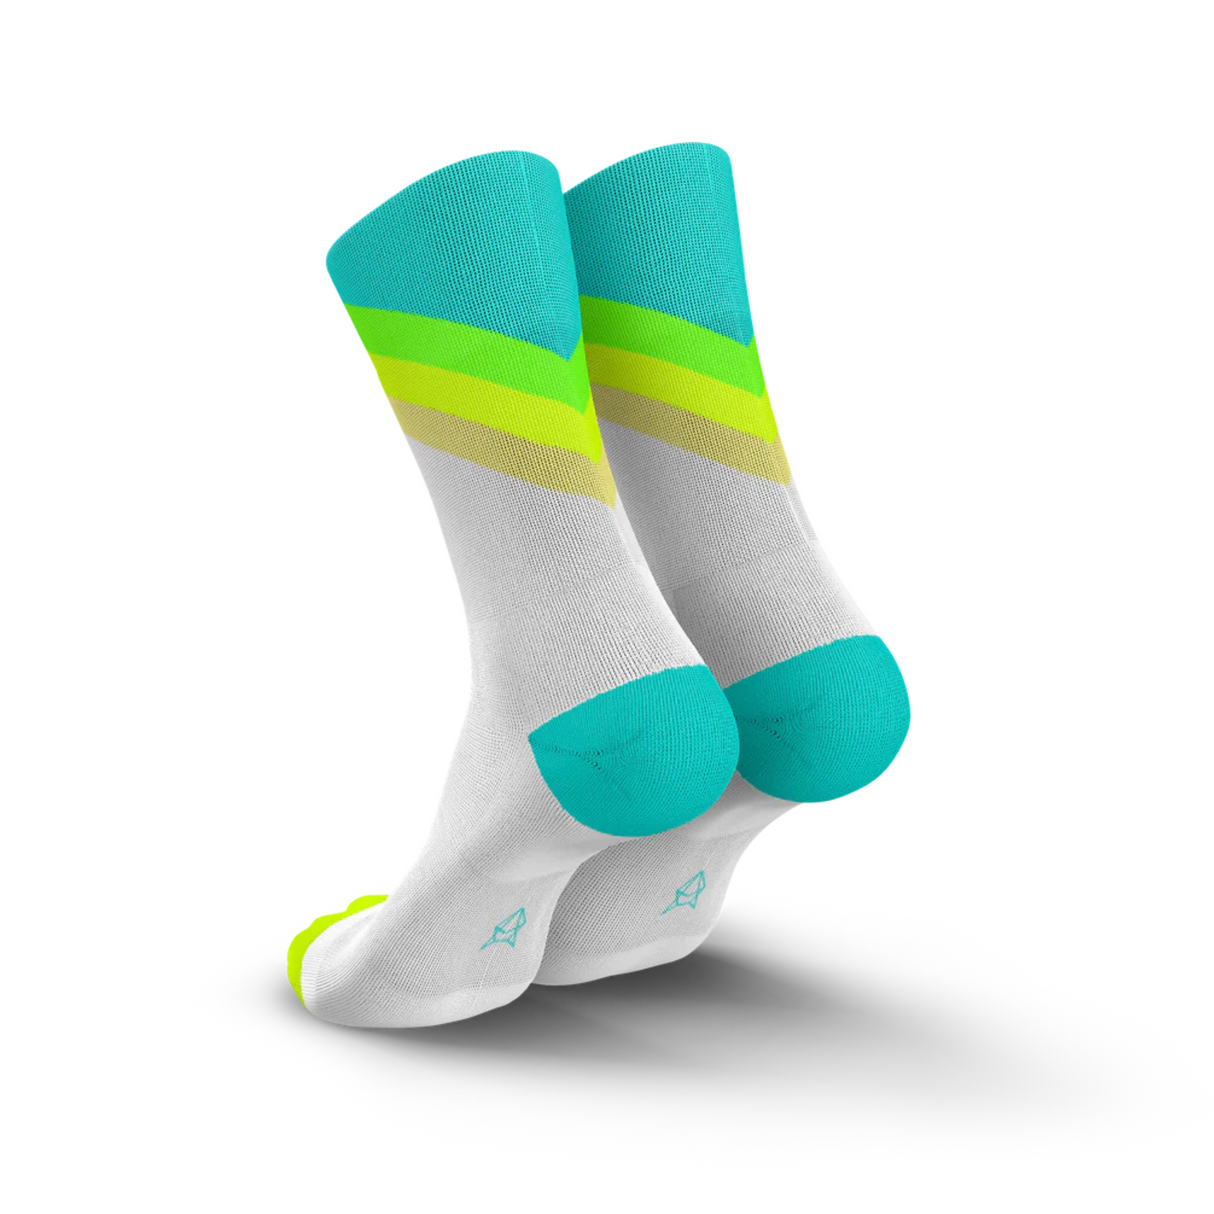 Incylence - Incylence Grades High-Cut Running Socks - Cam2 